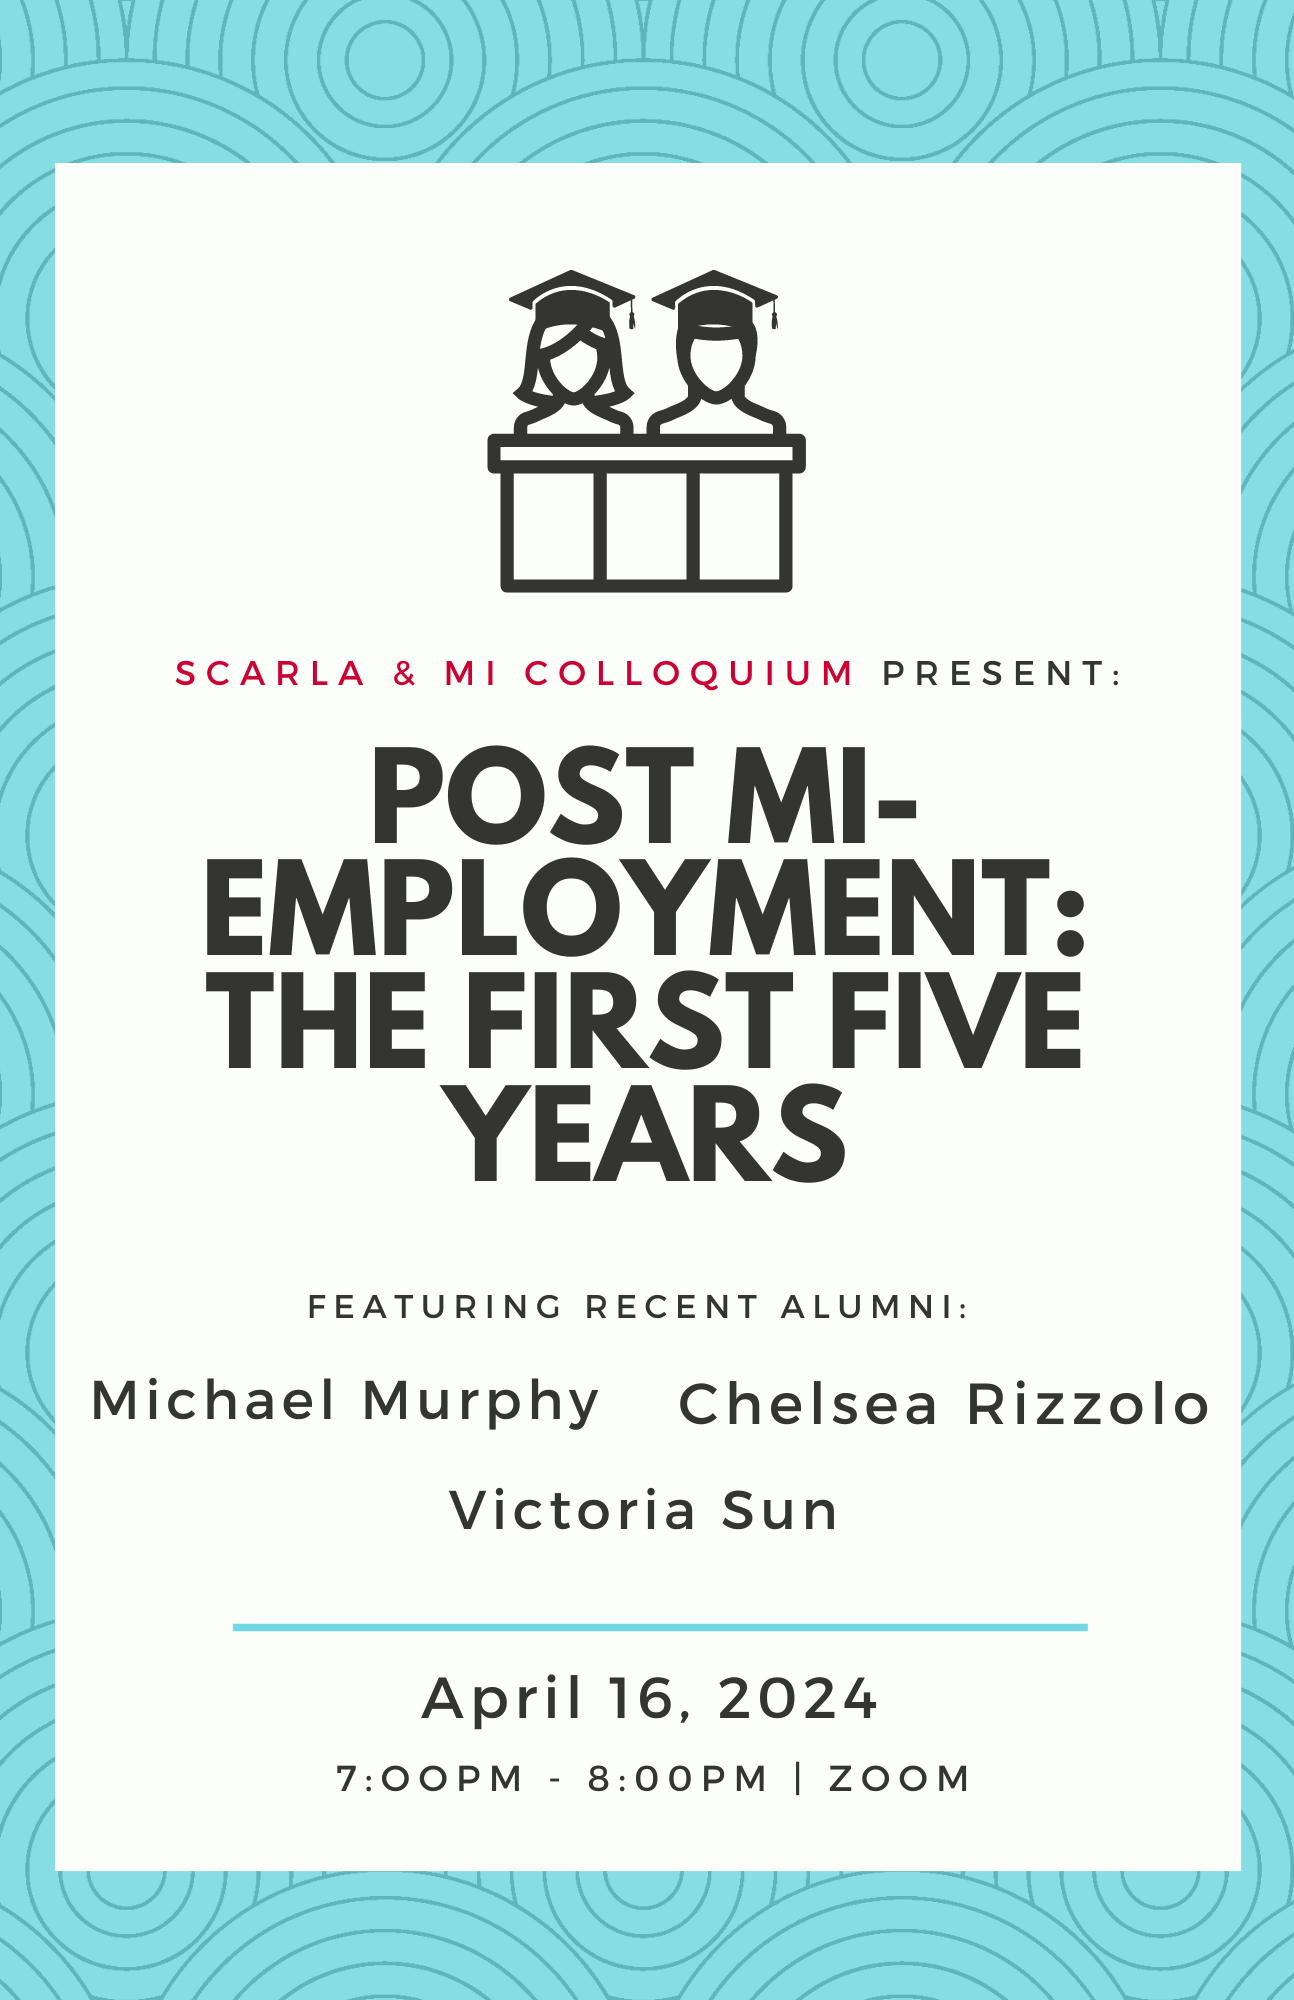 SCARLA & MI Colloquium present: "Post MI-Employment: the First Five Years", featuring recent alumni Michael Murphy, Chelsea Rizzolo, and Victoria Sun. April 16, 2024, 7:00 p.m.–8:00 p.m.